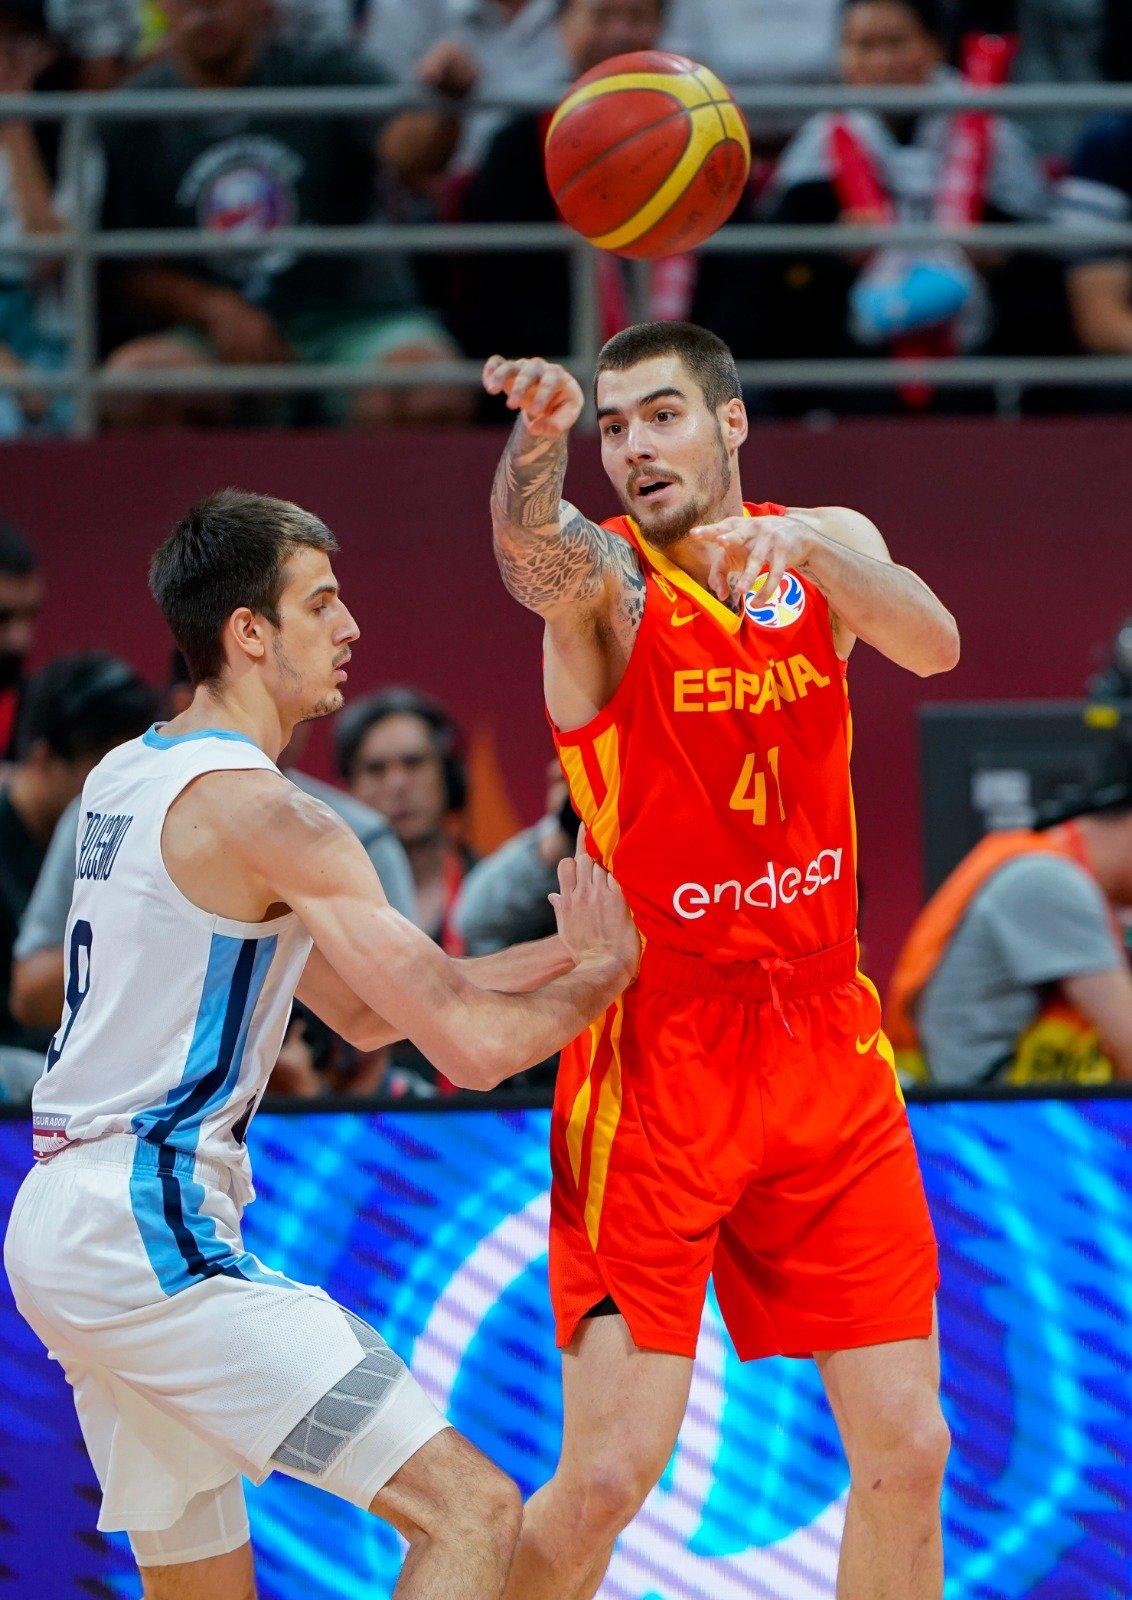 Spain 2019 FIBA World Cup Champion wallpaper